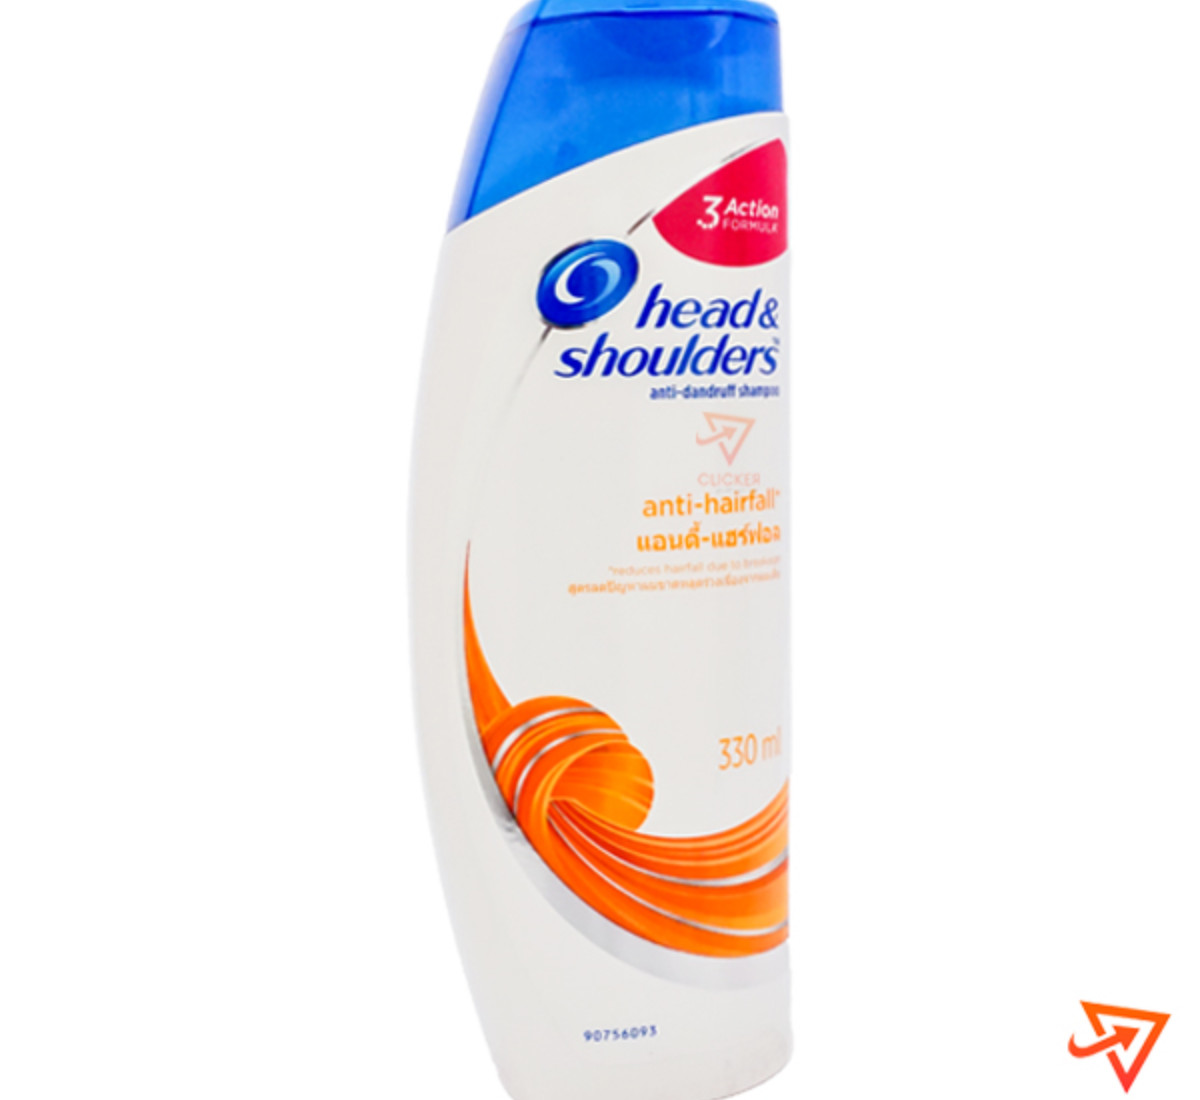 Clicker product 330ml HEAD&SHOULDERS anti-hairfall shampoo 1092